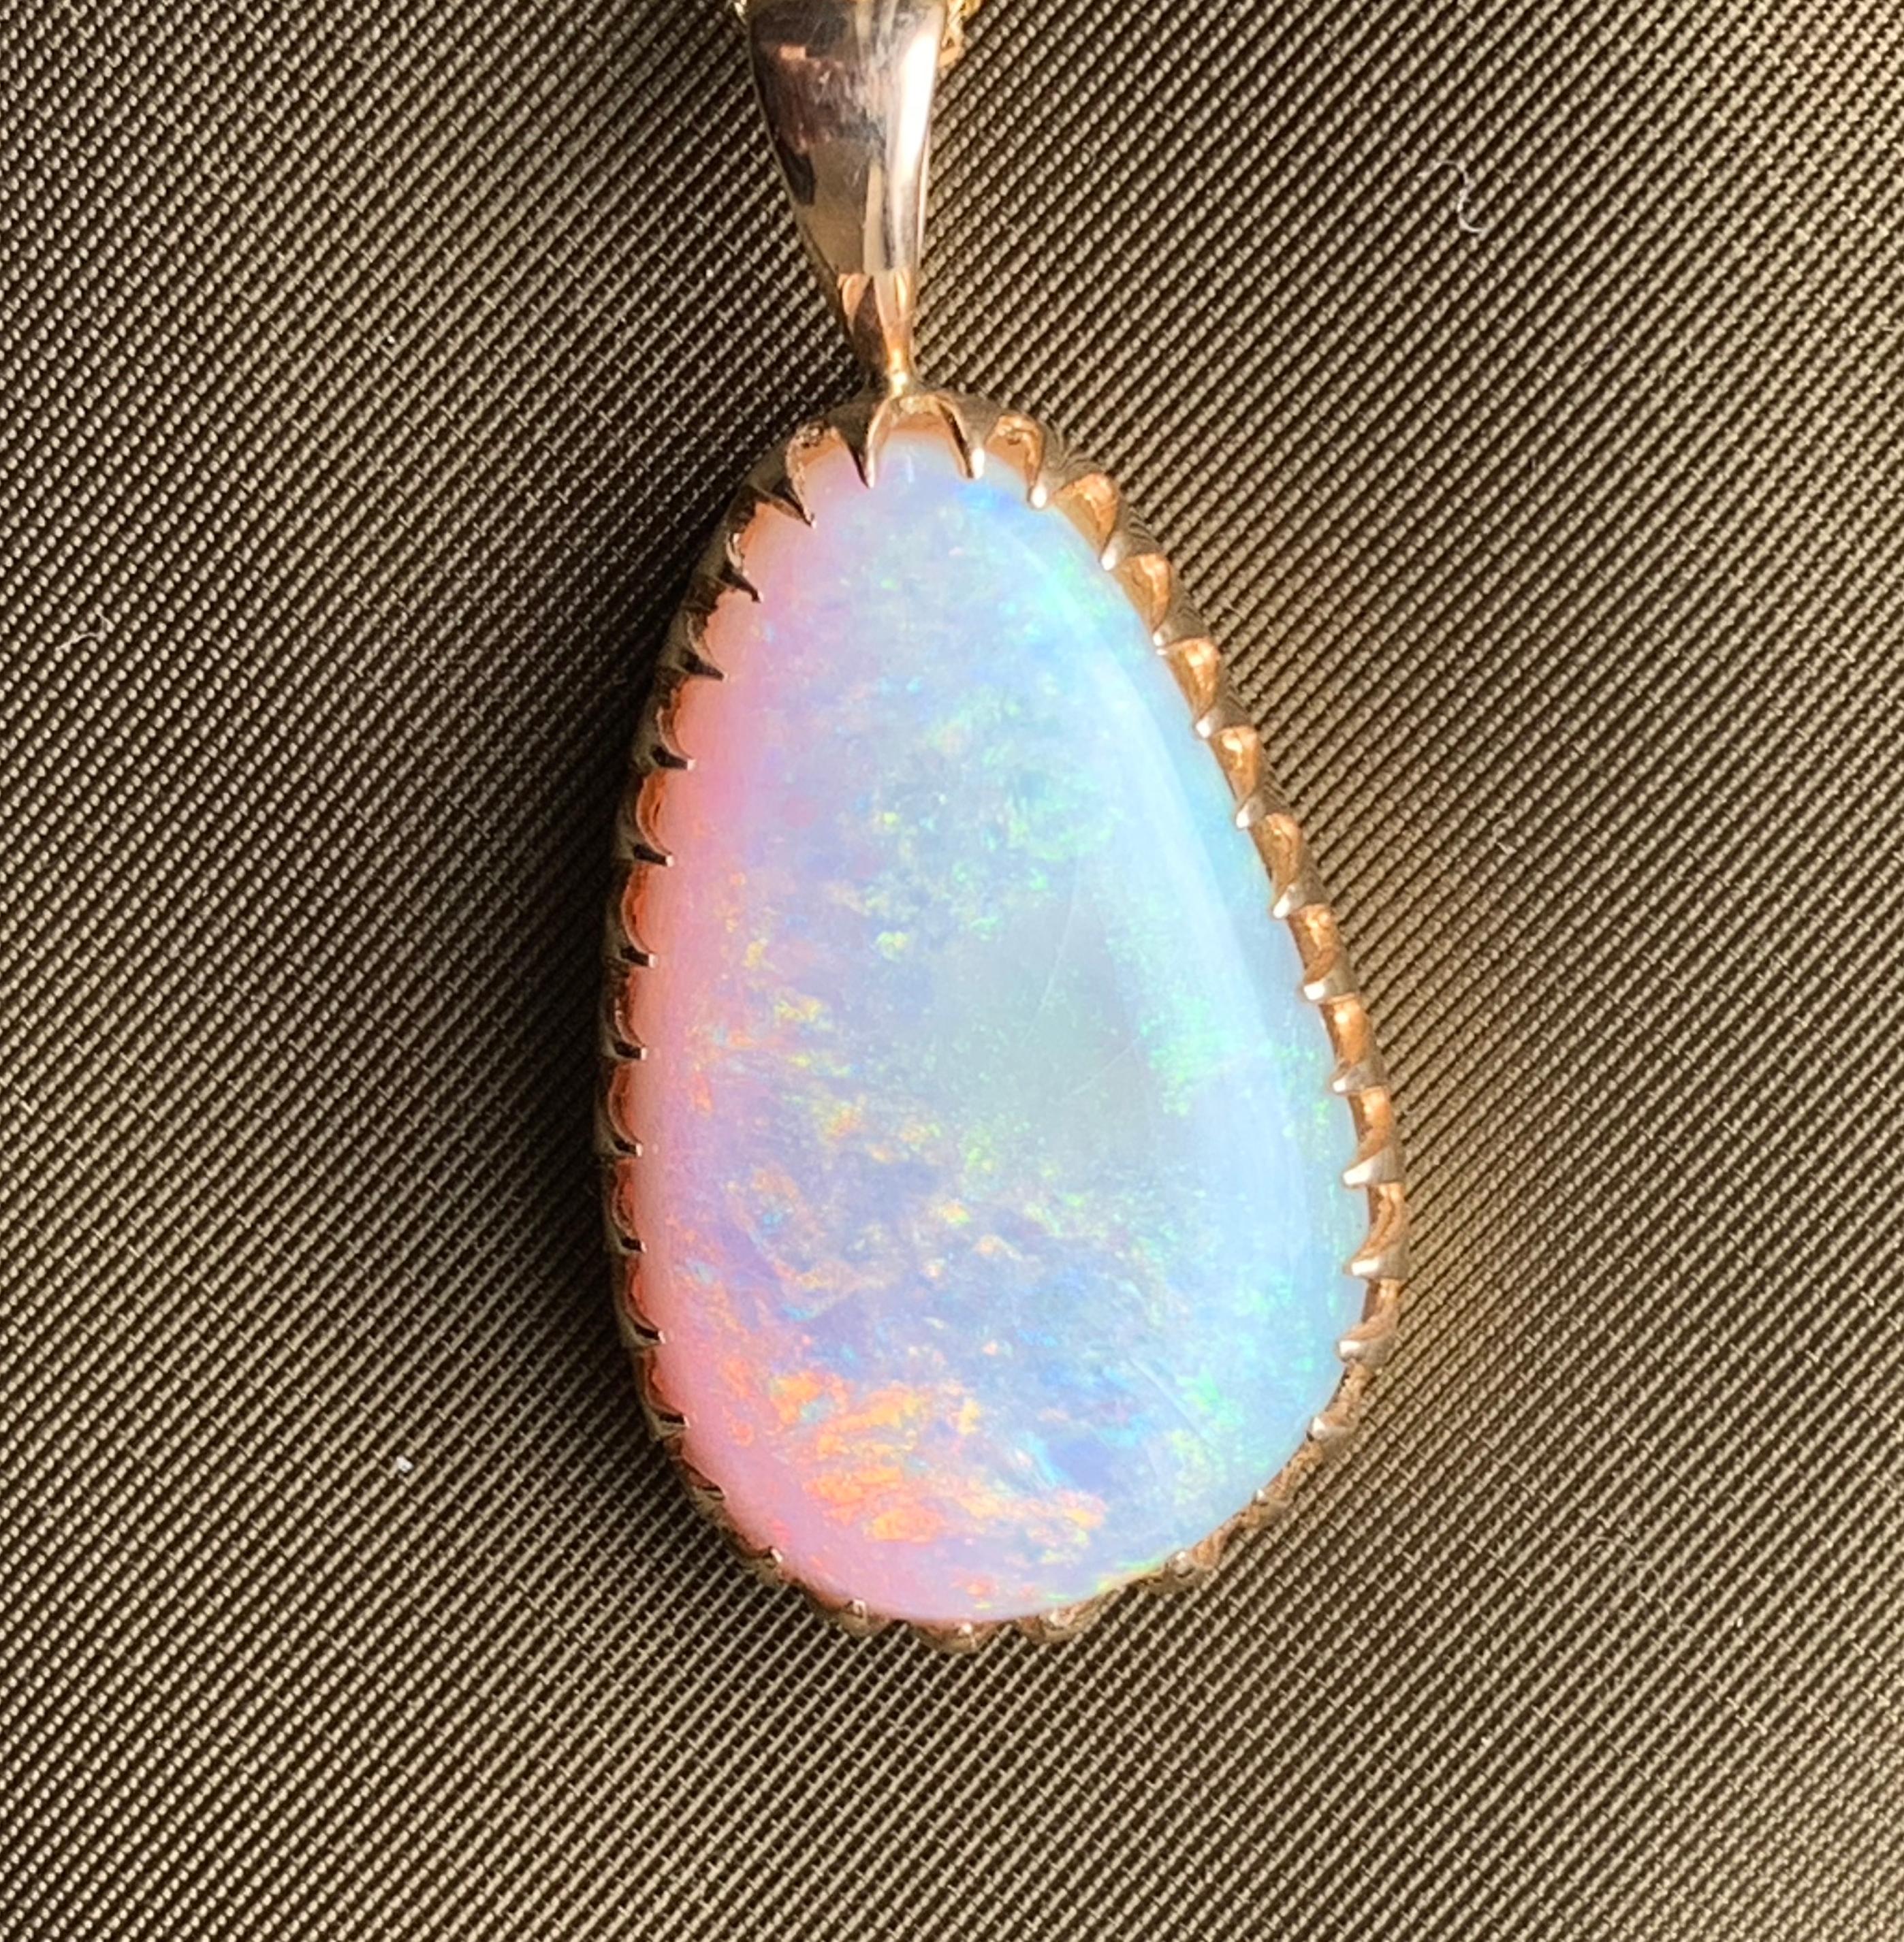 10 carat opal price